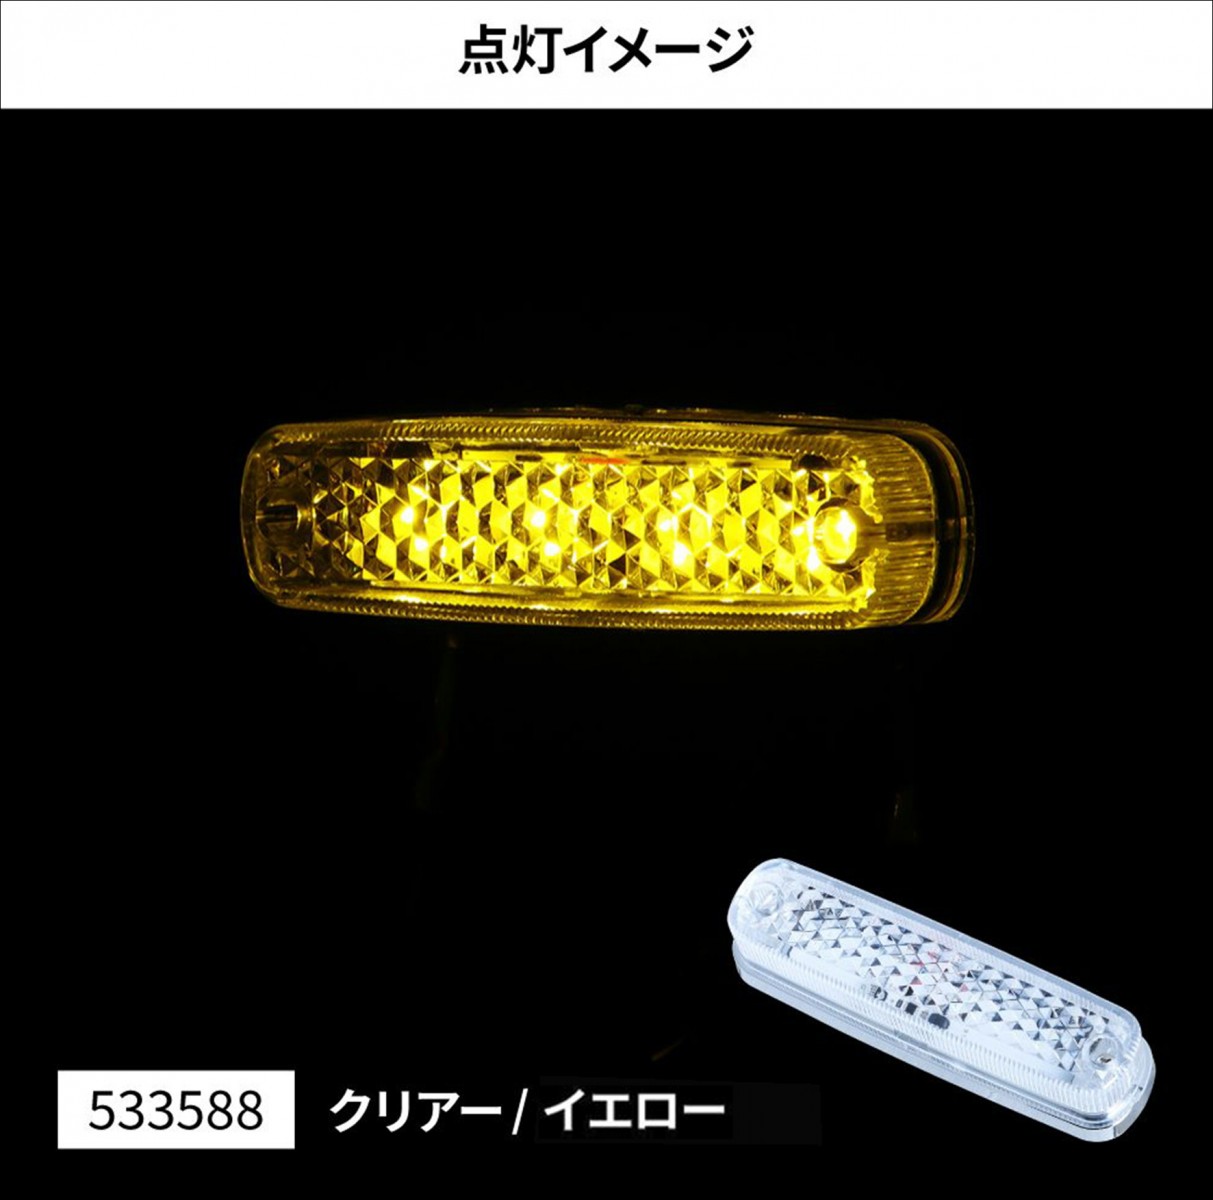 LED 車高灯ランプNEO 各色 | 大阪のトラックショップＫＥＮＺはトラックパーツ、トラック用品、トラック部品の通販などトラック用品専門店